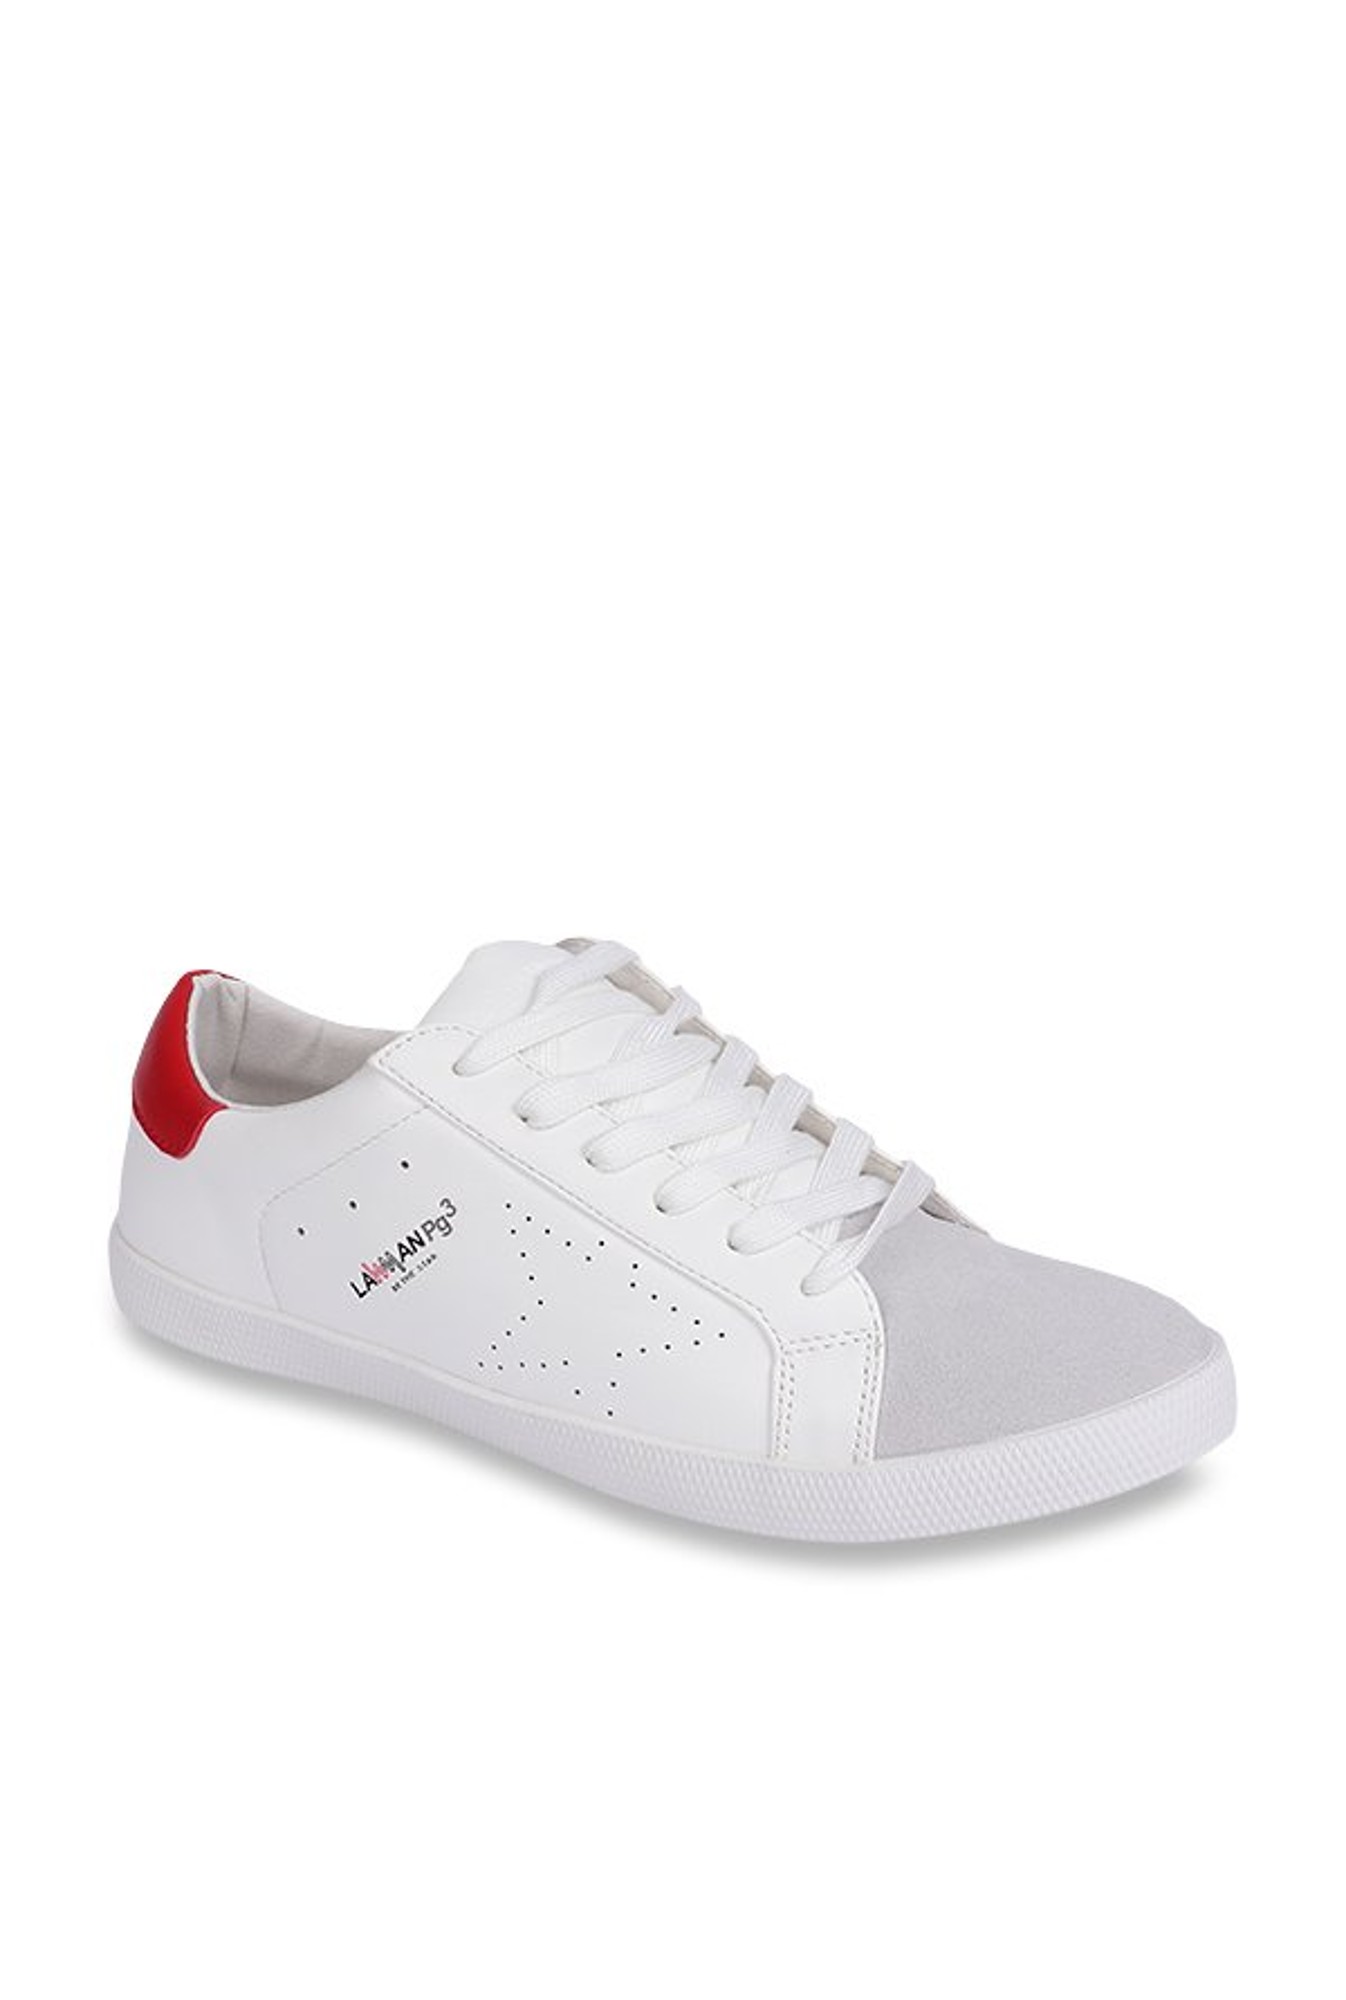 Buy Lawman Pg3 White Casual Sneakers 